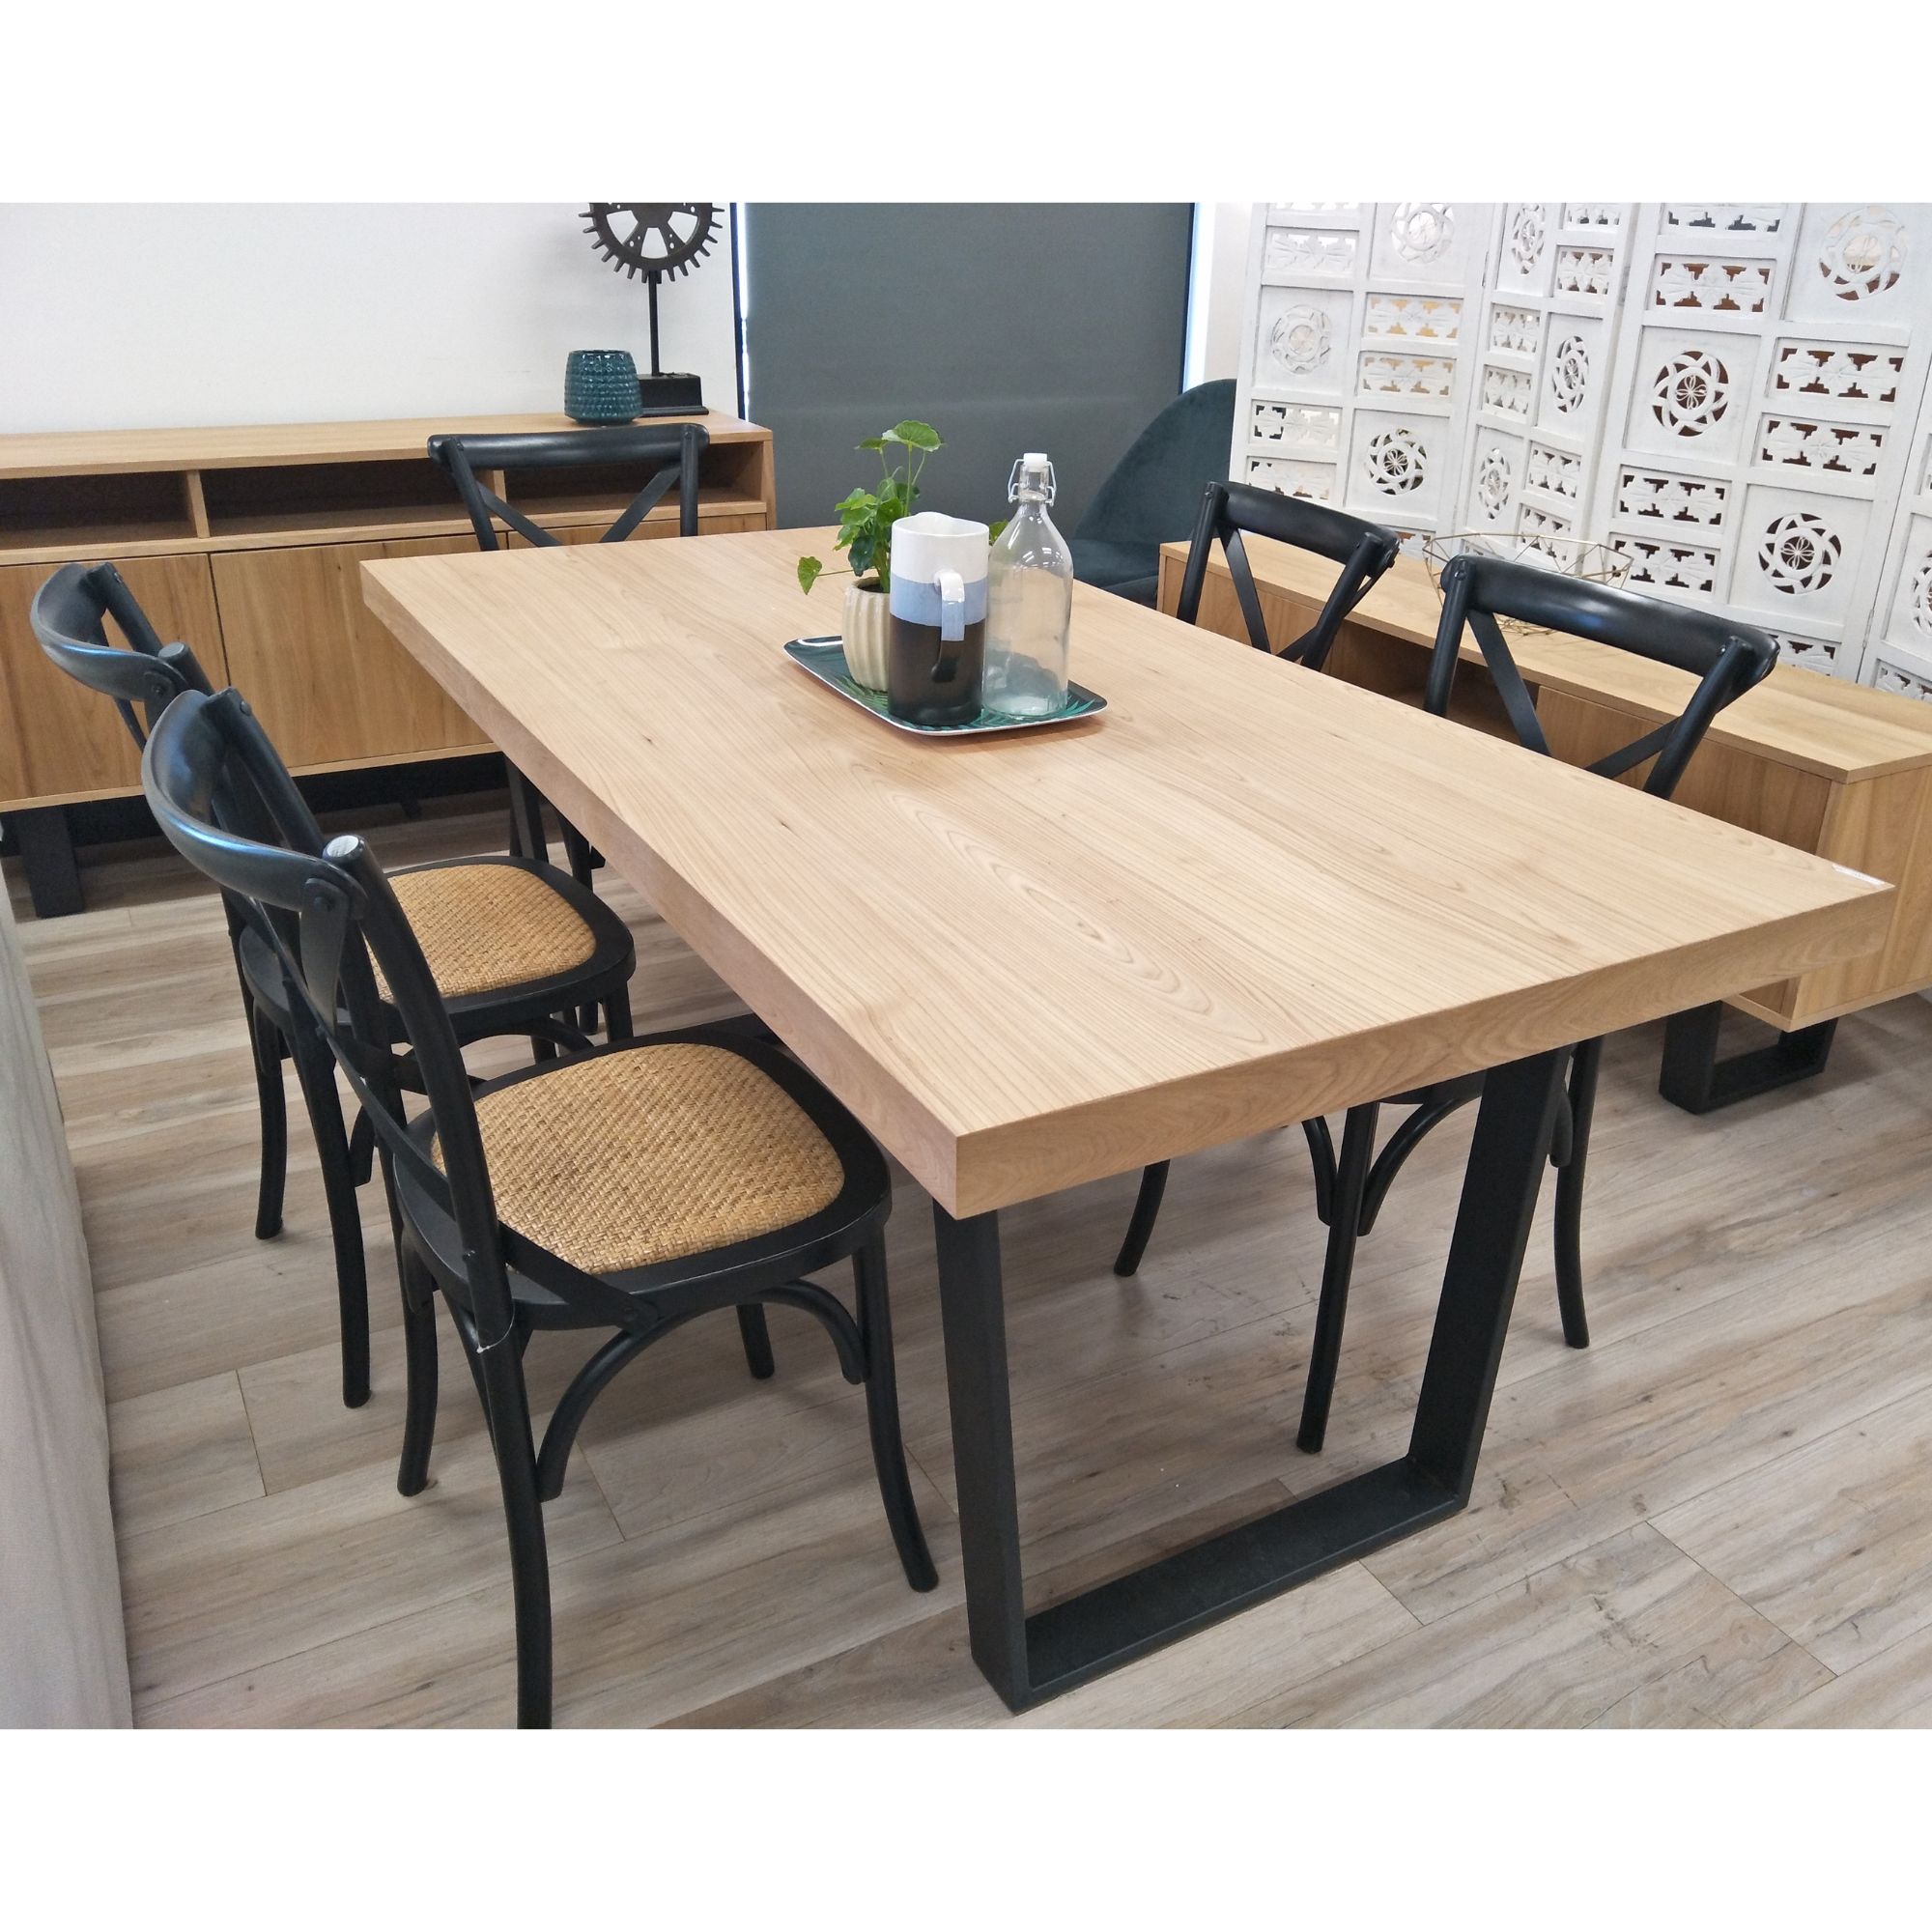 Petunia  Dining Table Elm Timber Wood Black Metal Leg – Natural – 210x100x76 cm